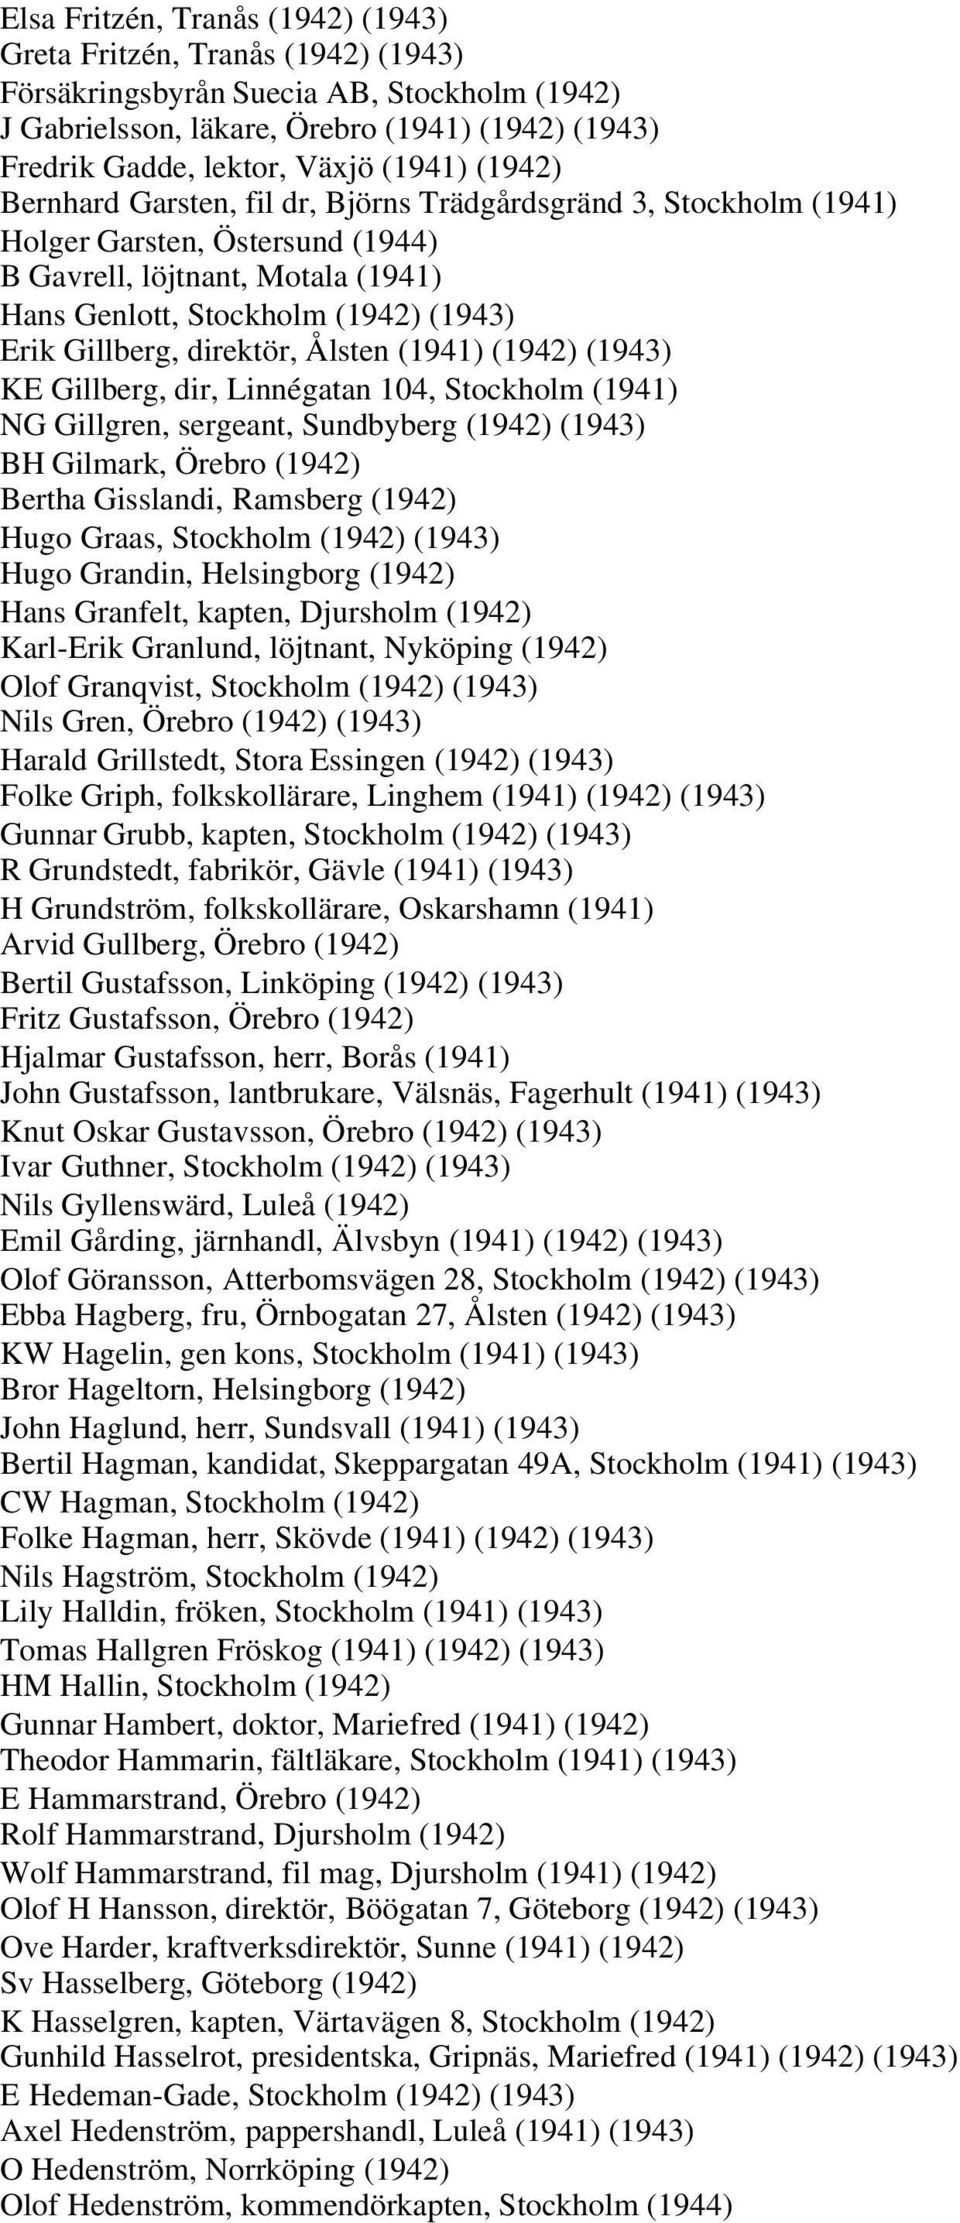 Gillberg, direktör, Ålsten (1941) (1942) (1943) KE Gillberg, dir, Linnégatan 104, Stockholm (1941) NG Gillgren, sergeant, Sundbyberg (1942) (1943) BH Gilmark, Örebro (1942) Bertha Gisslandi, Ramsberg